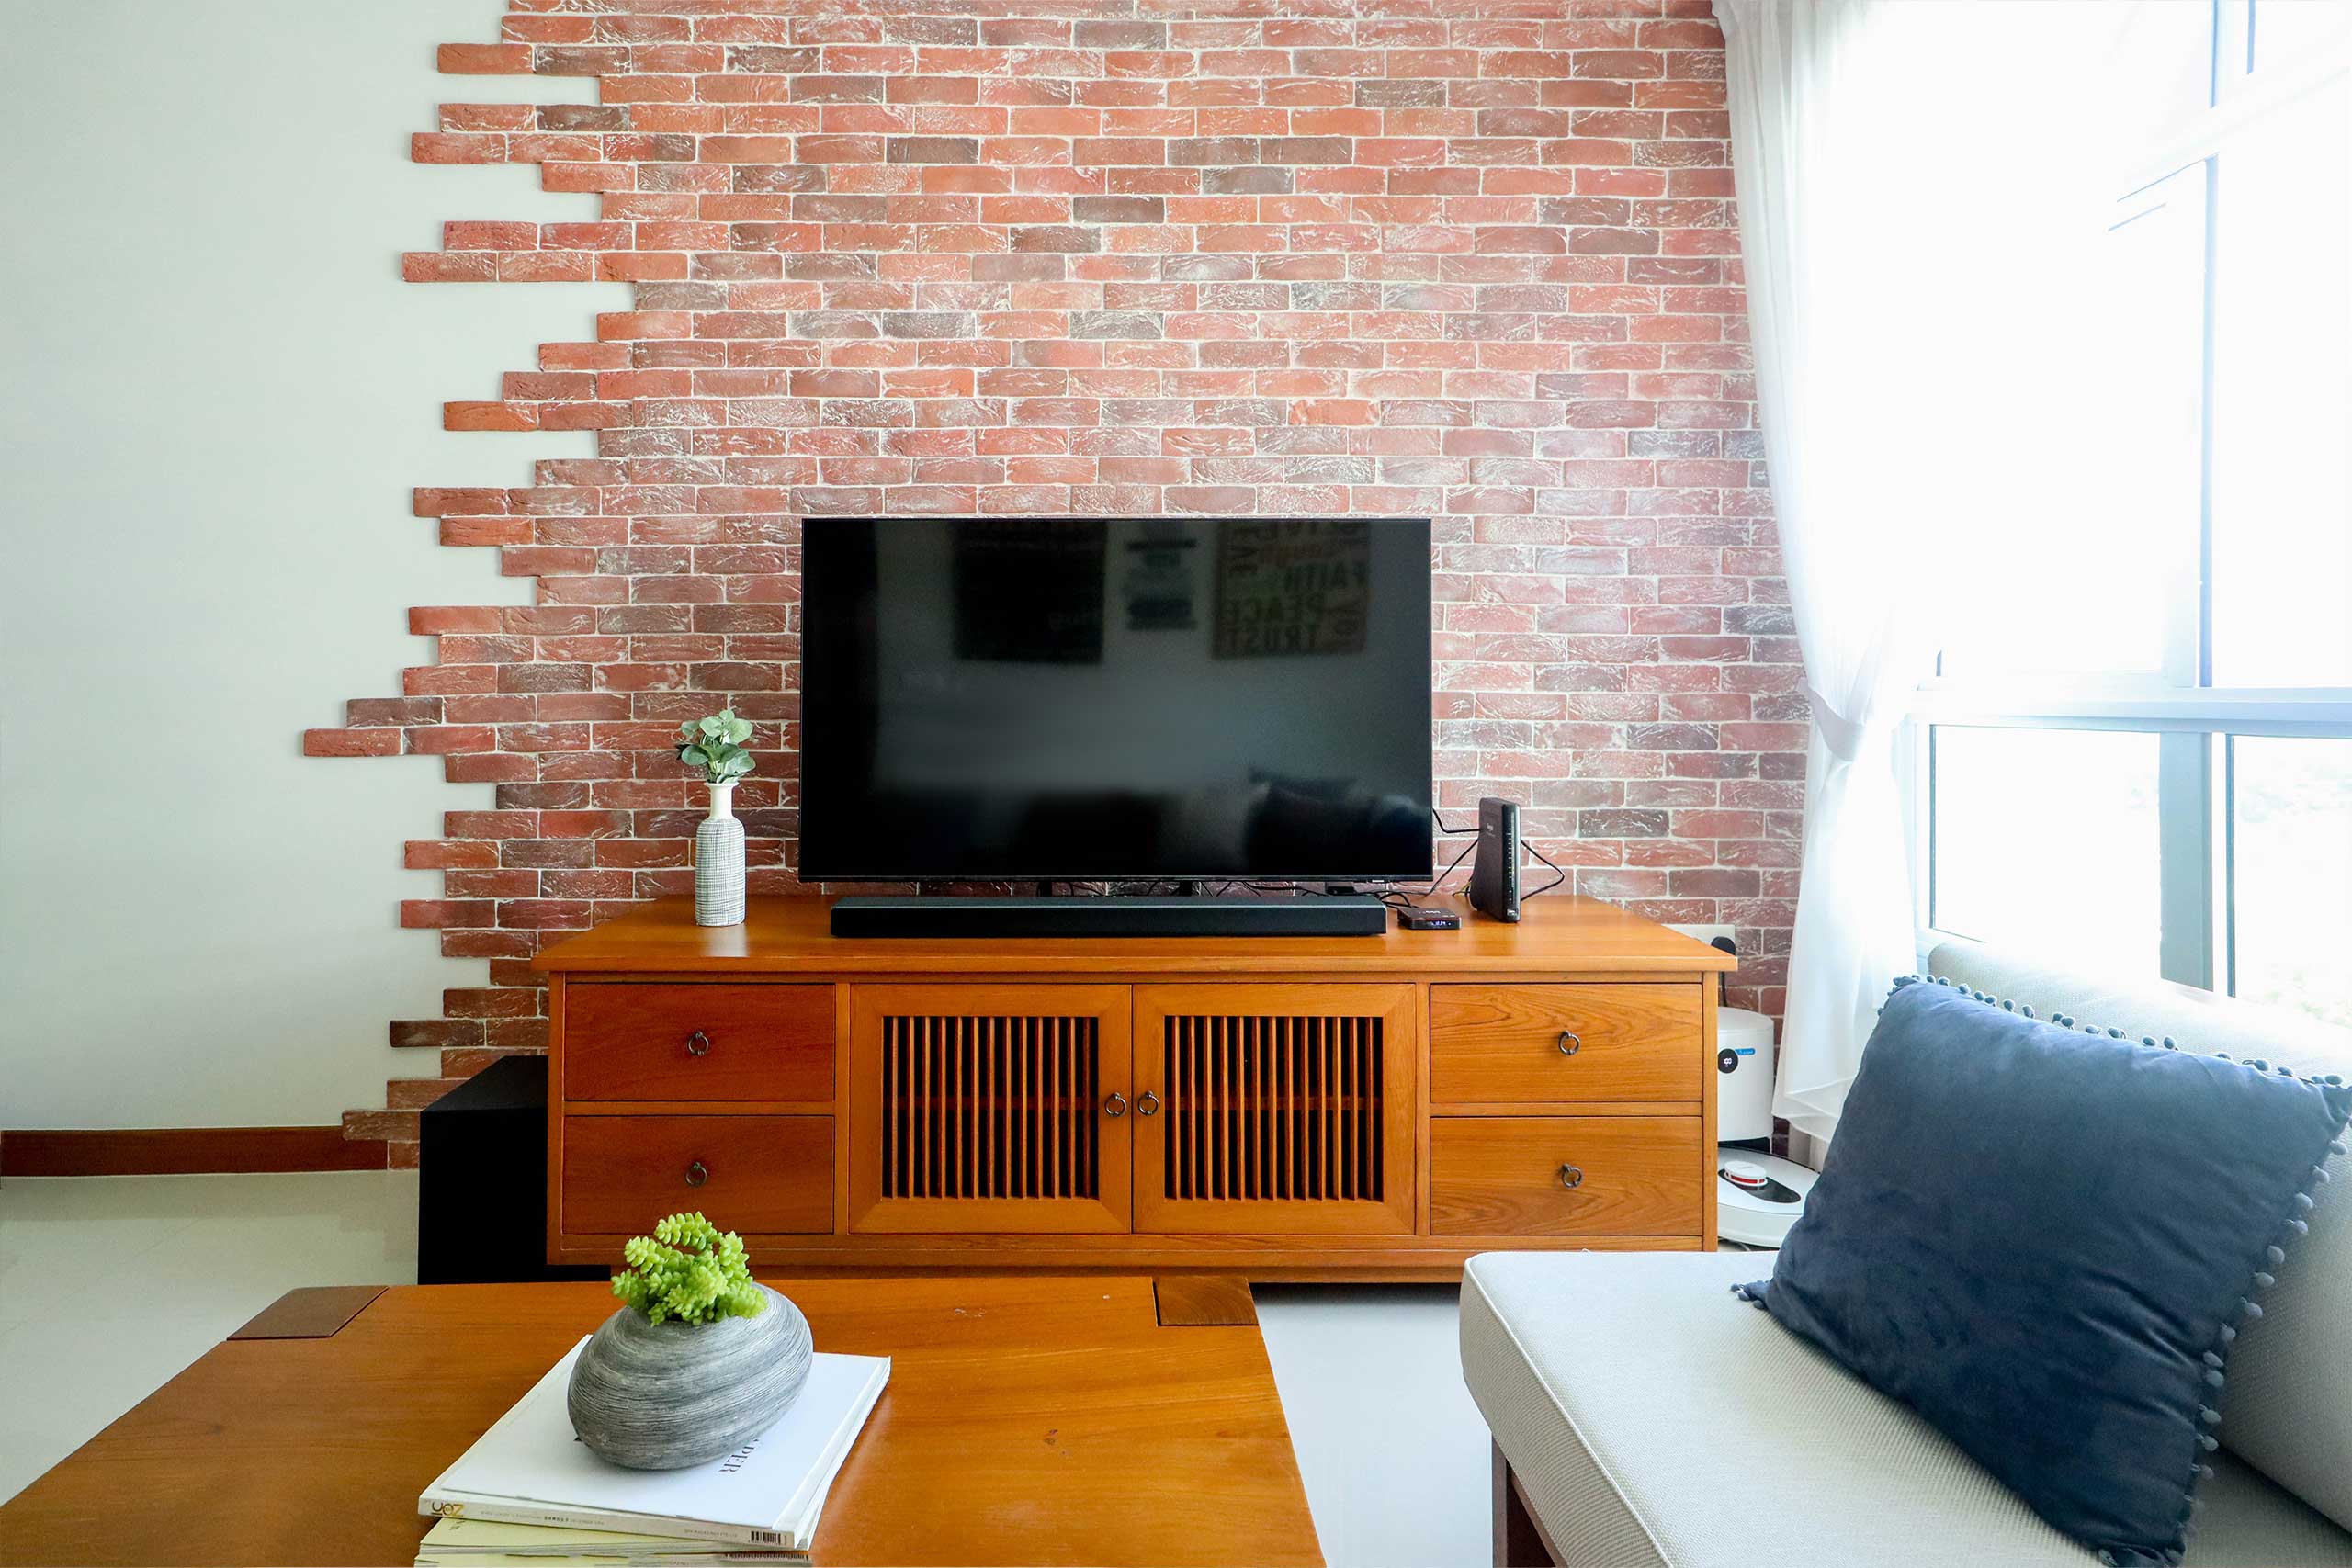 Brick stucco wall with for Korean pastel home edgefield plains HDB interior design